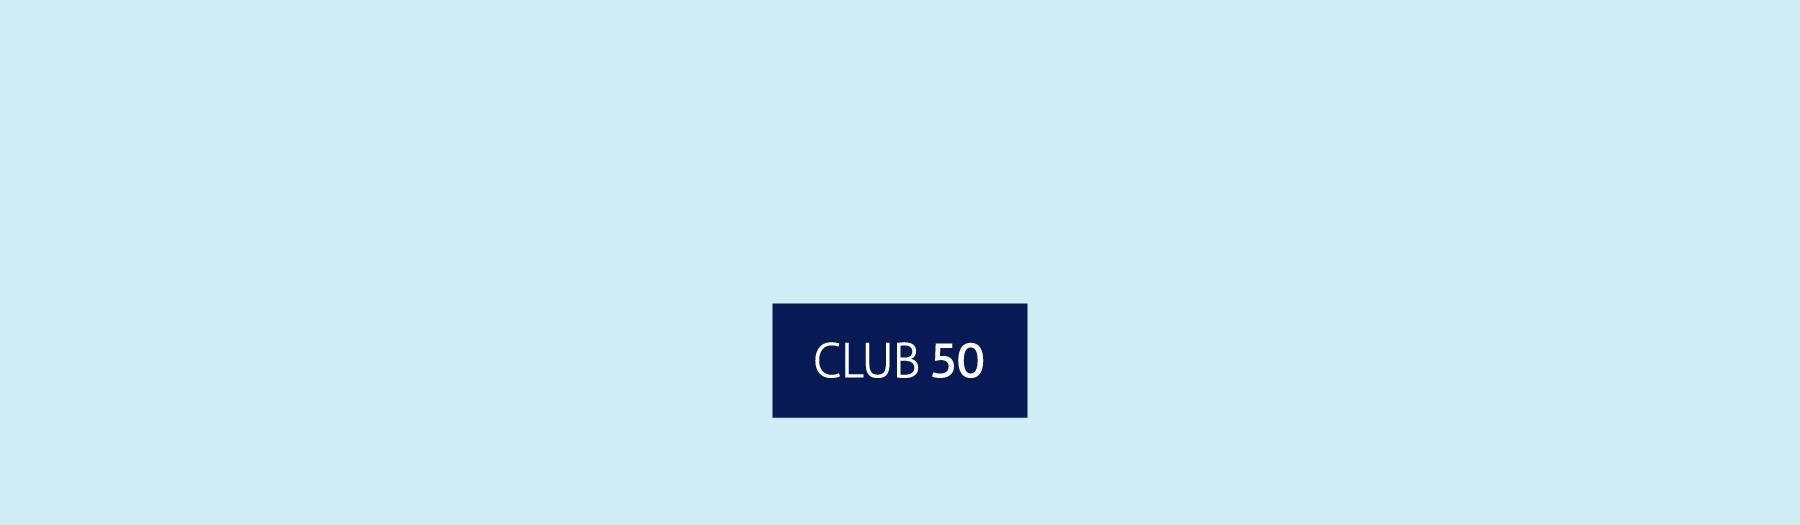 Club 50 banner